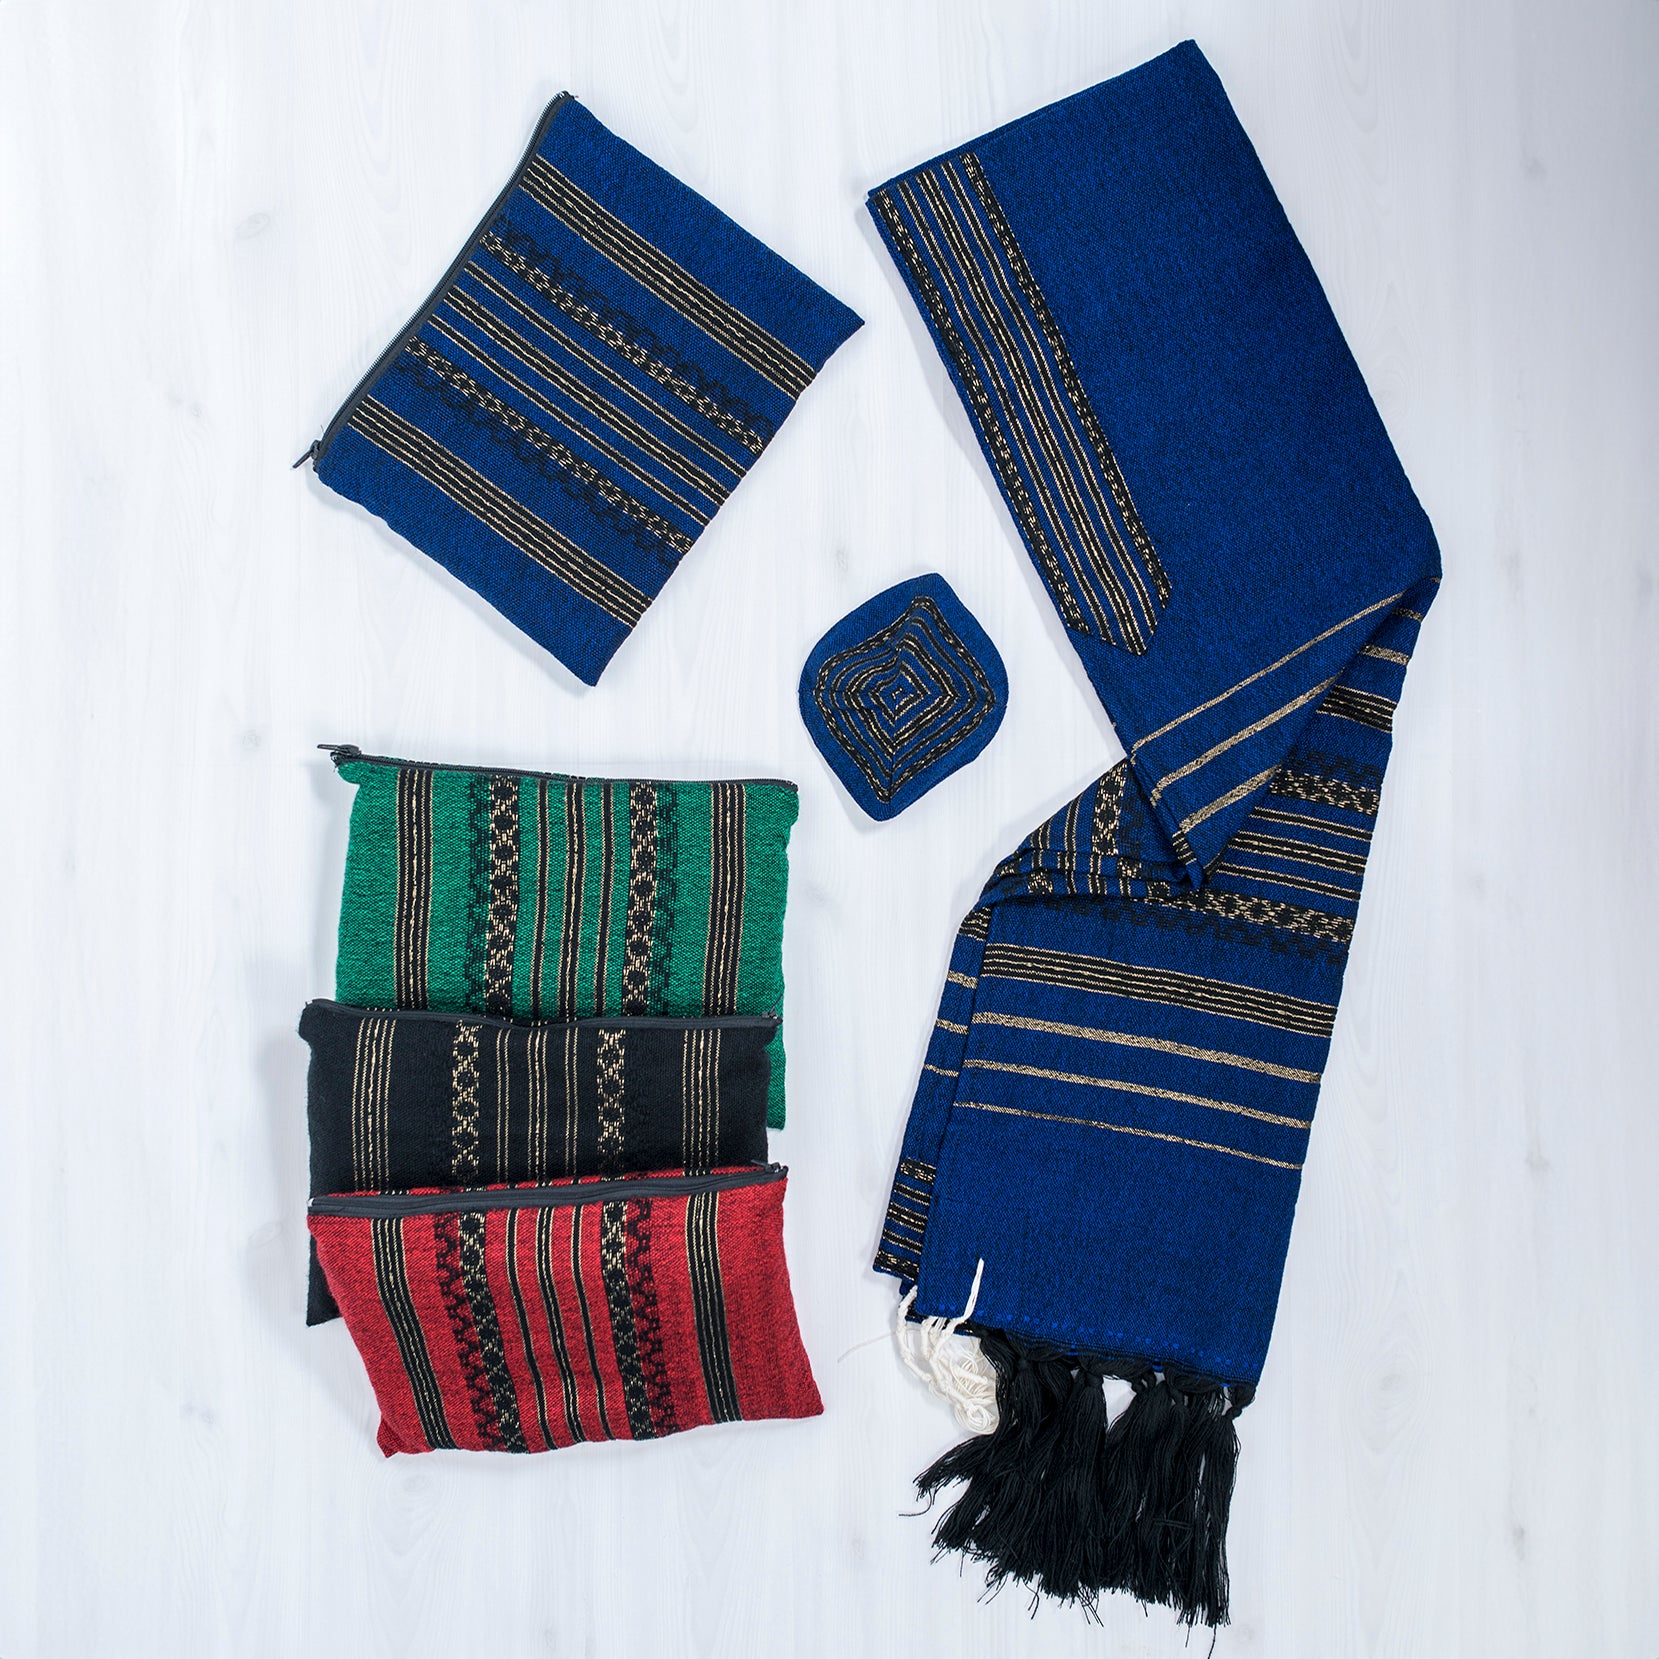 Hagar - Wool Tallit - Black and Gold on Blue